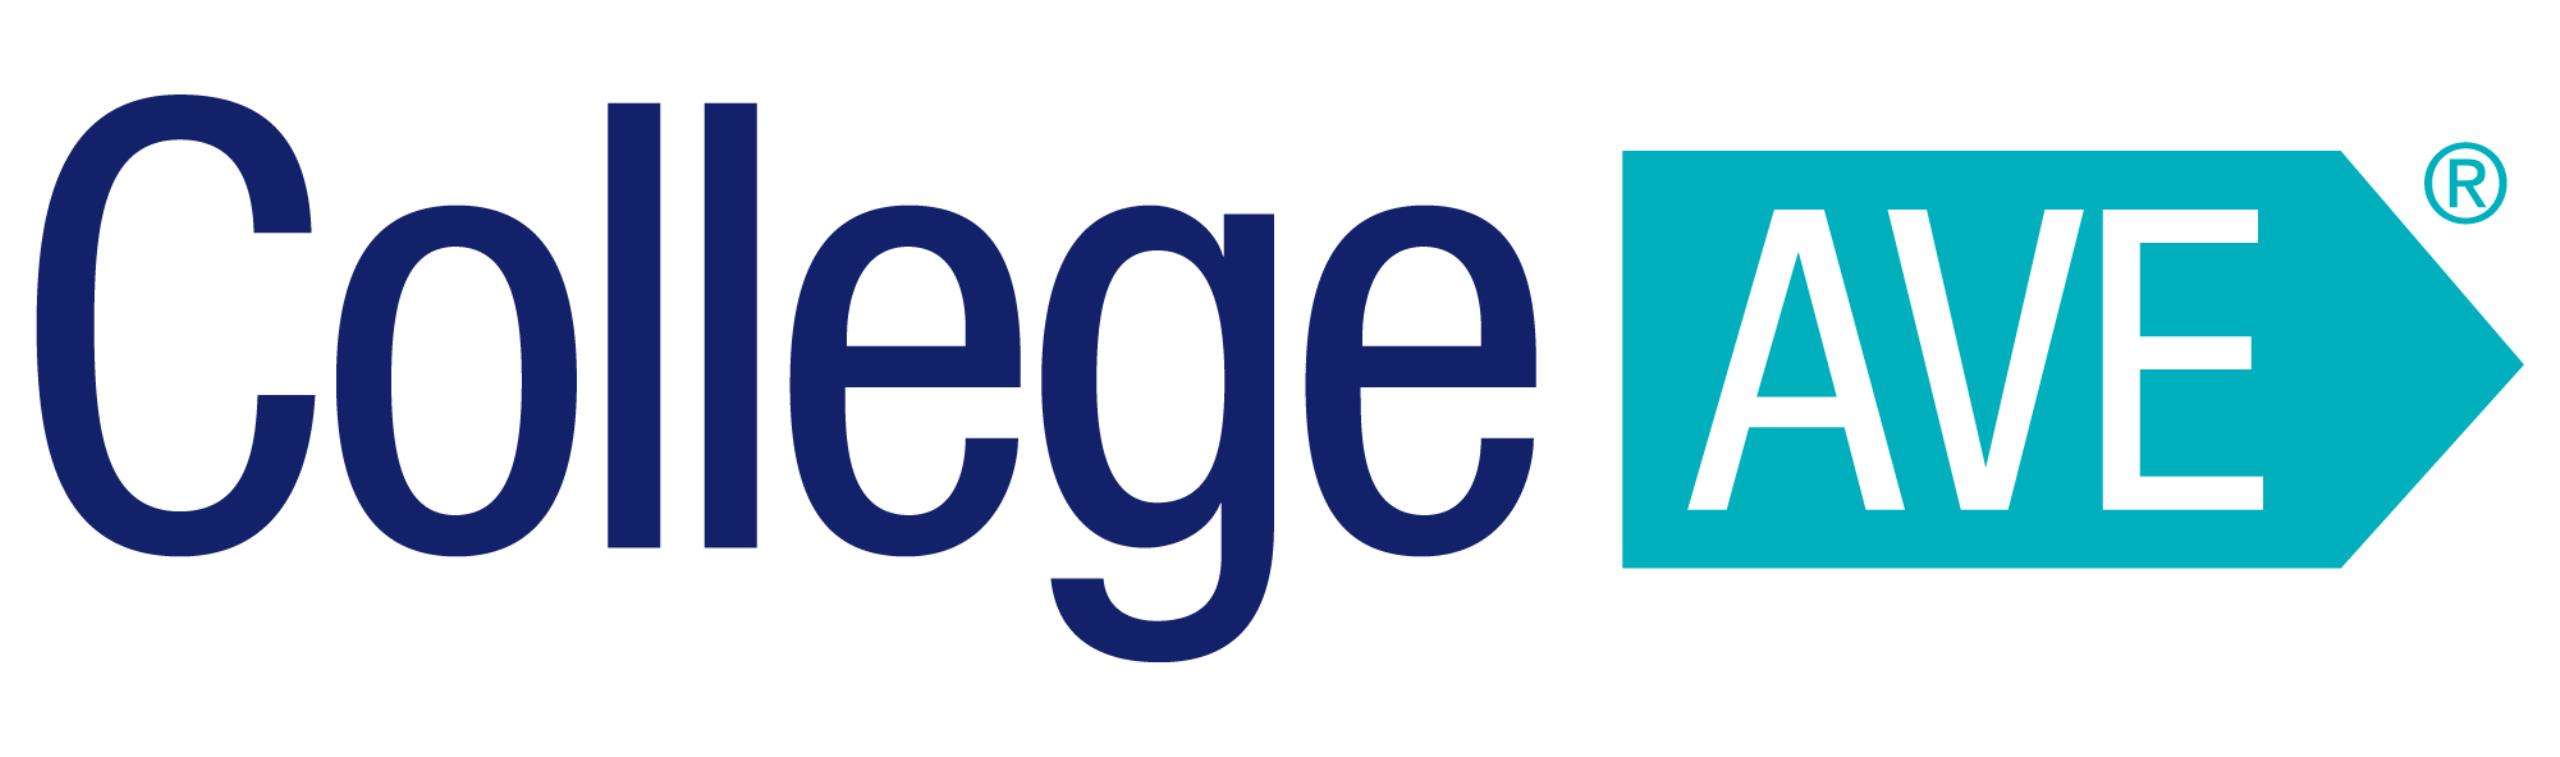 College Avenue Student Loans, LLC Logo